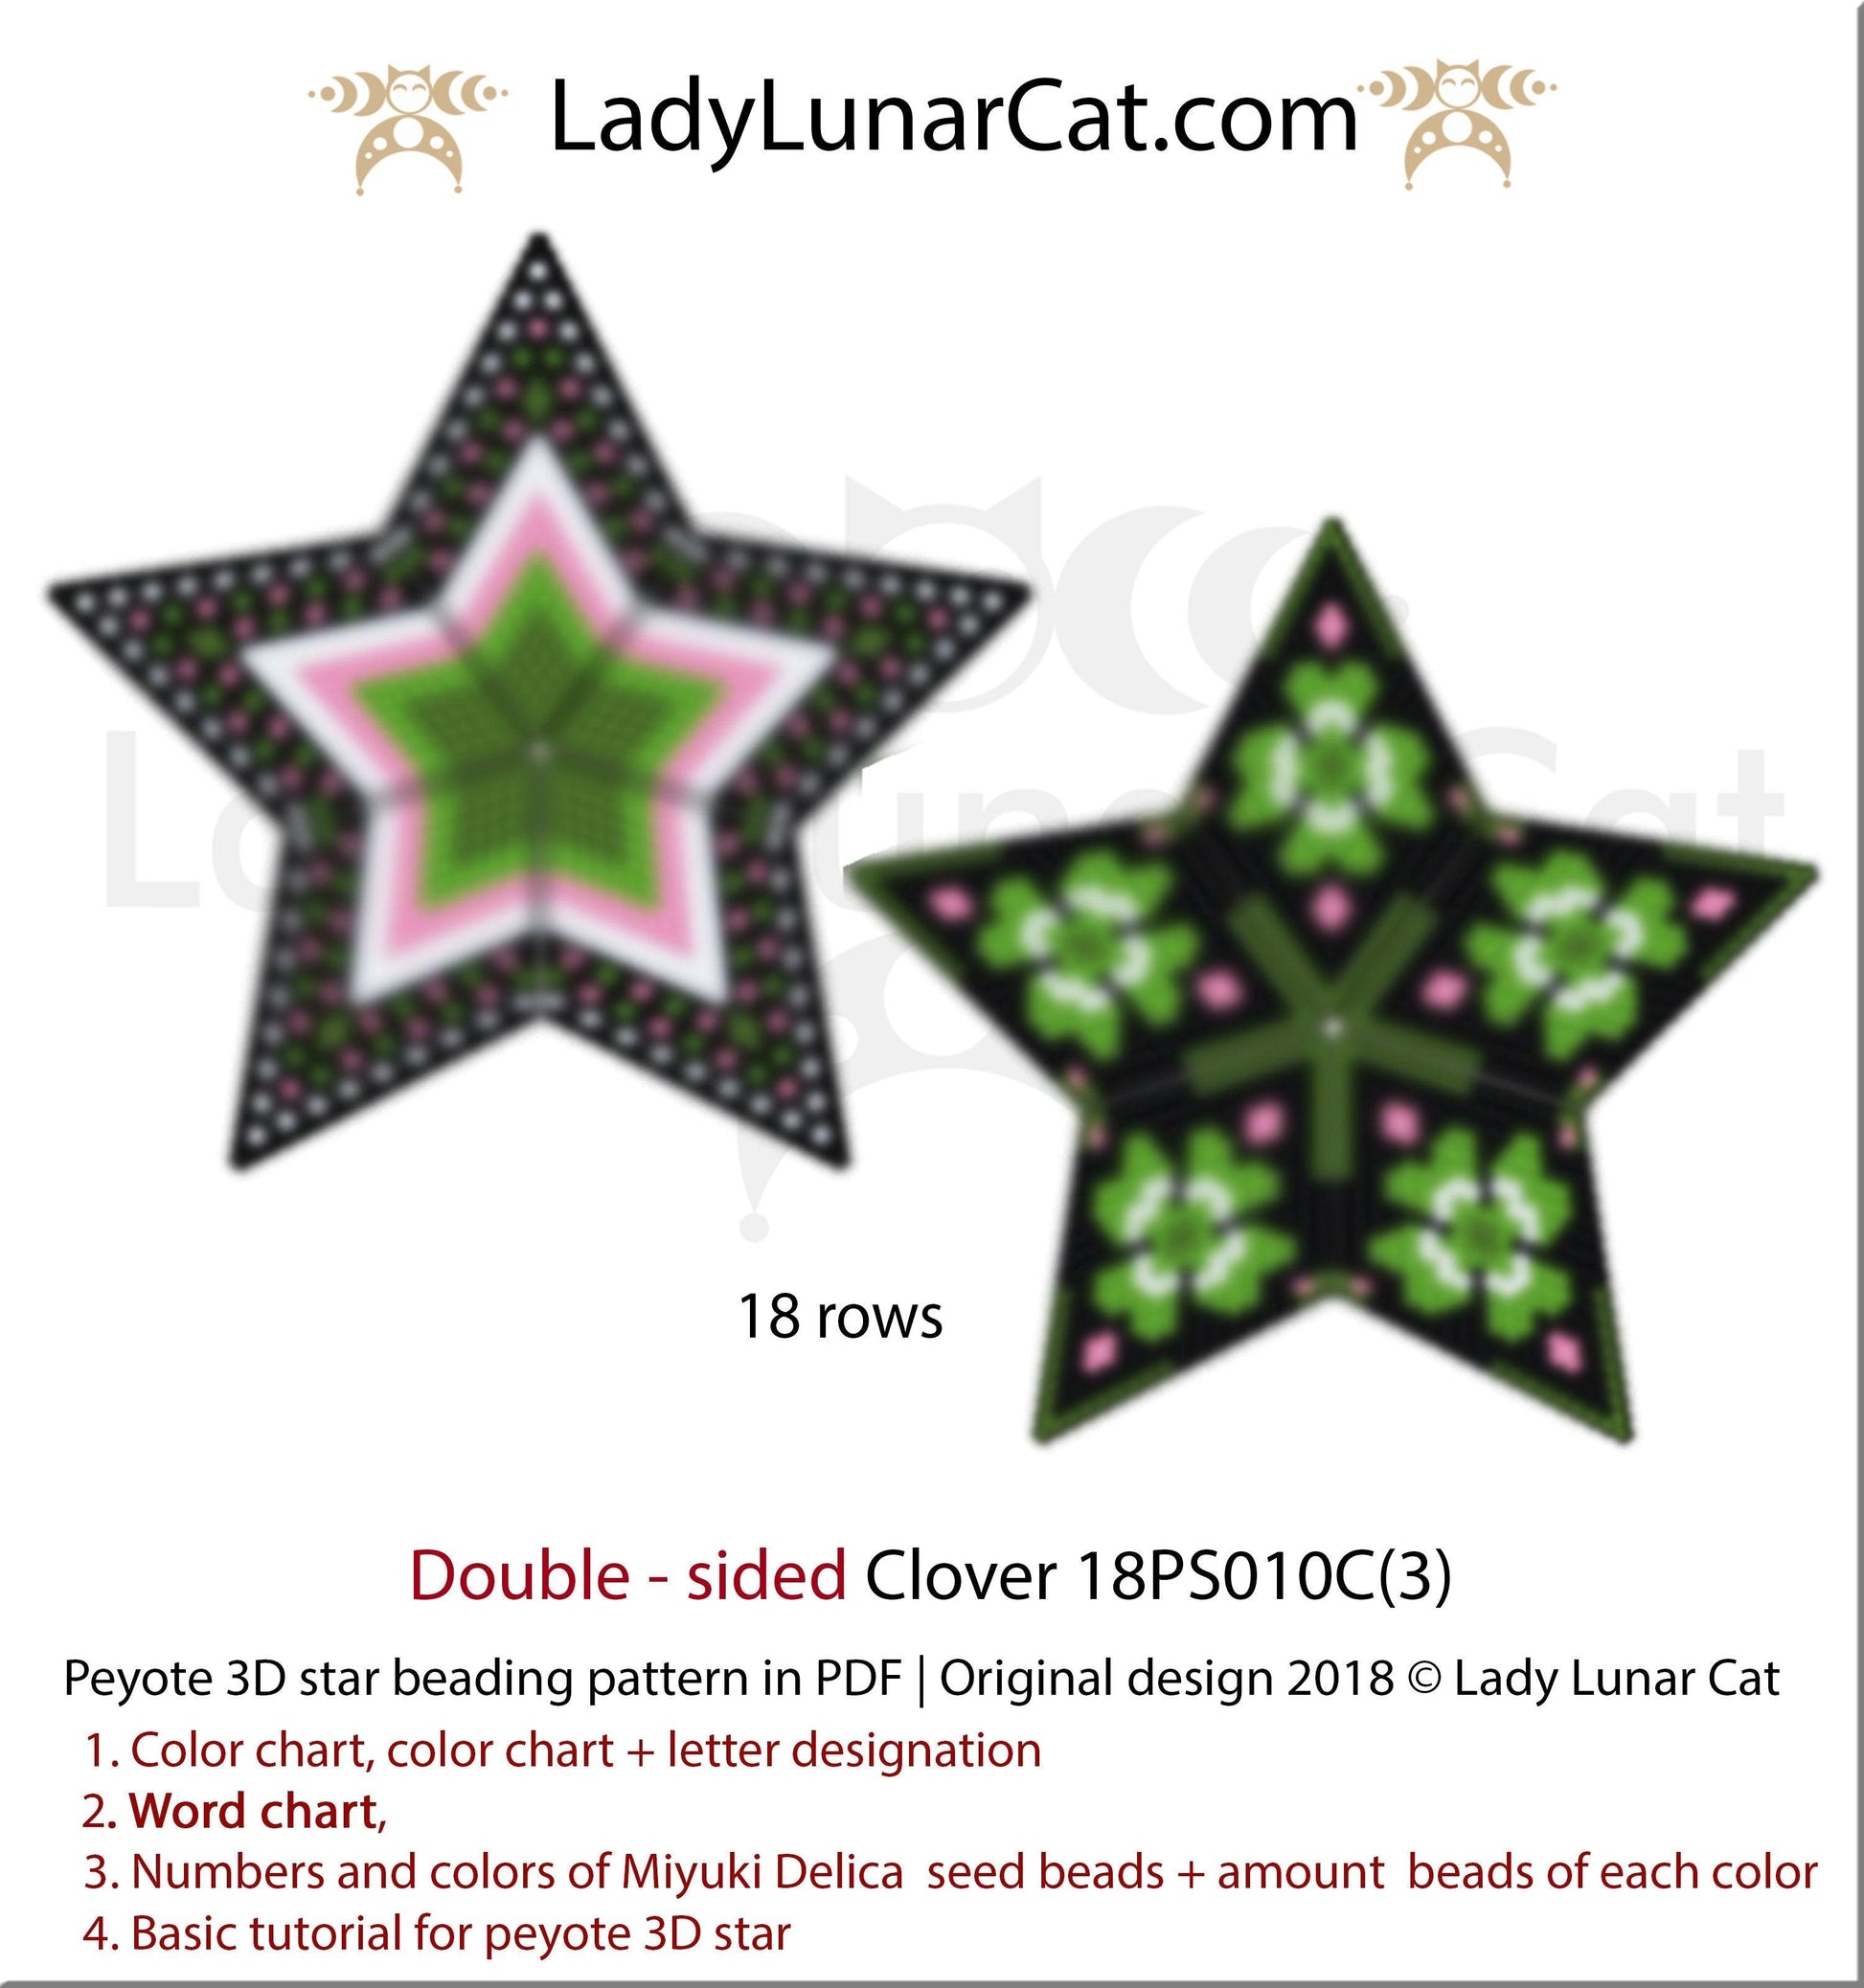 Beaded star pattern for beadweaving Clover 18PS010 LadyLunarCat